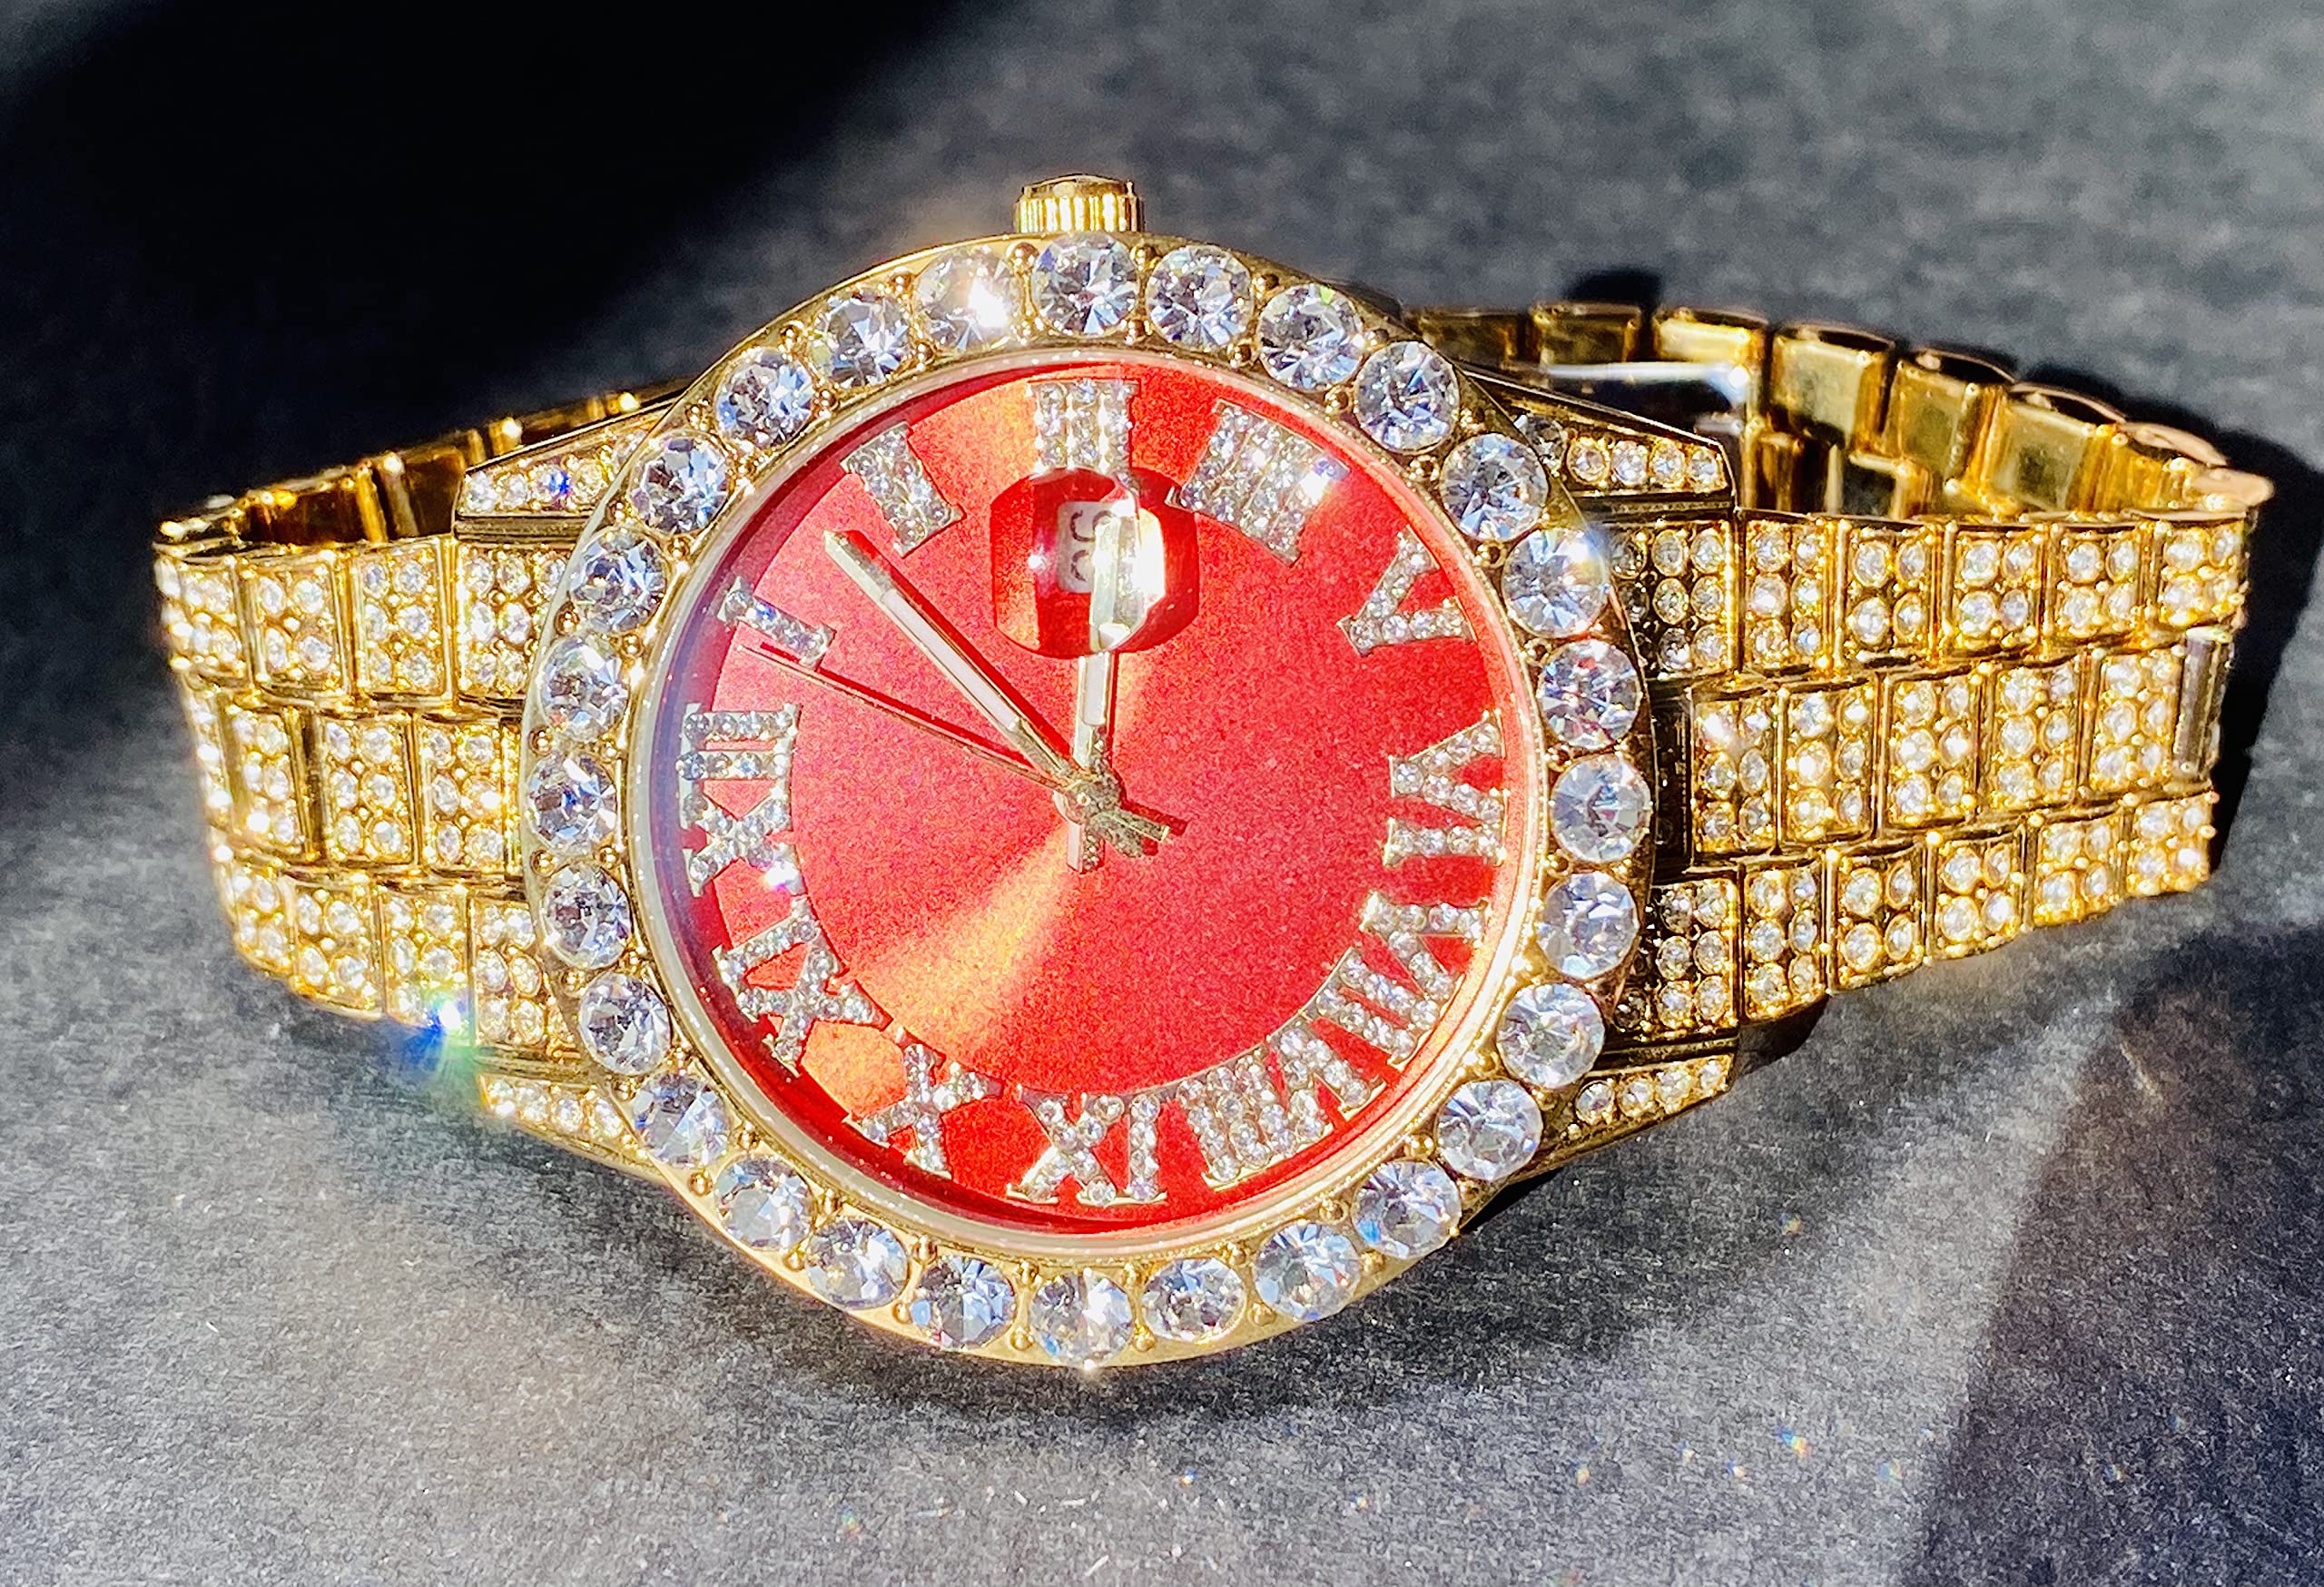 Men's Round Gold Red Dial Wrist Watch Band Luxury CZ Diamond Iced Bracelet Watch Roman Numeric Dial Watch For Men Women Hip Hop Rapper Choice, Jewelry Watch, Iced Watch Custom Fit, Bust Down Watch